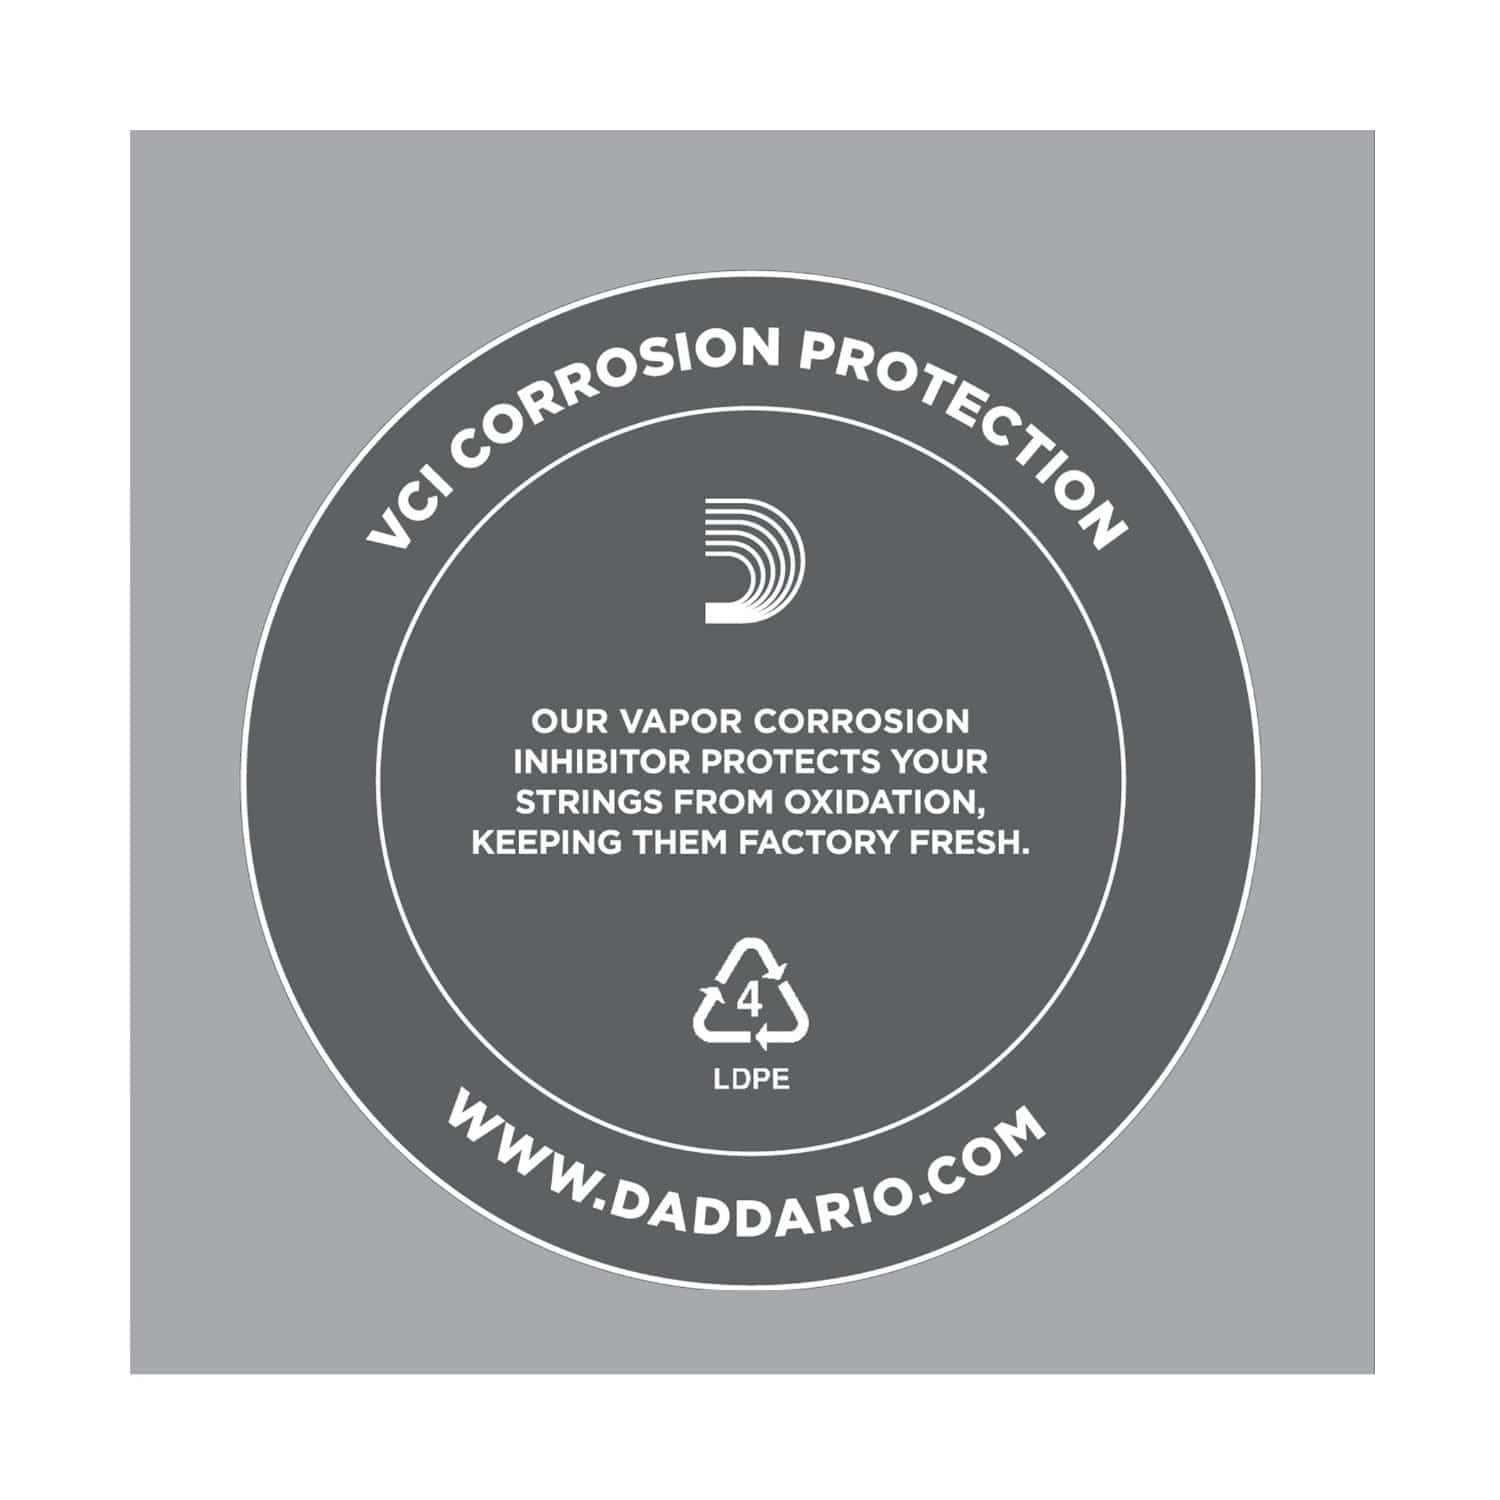 D’Addario PL007 Plain Steel Single String – Acoustic & Electric Guitar